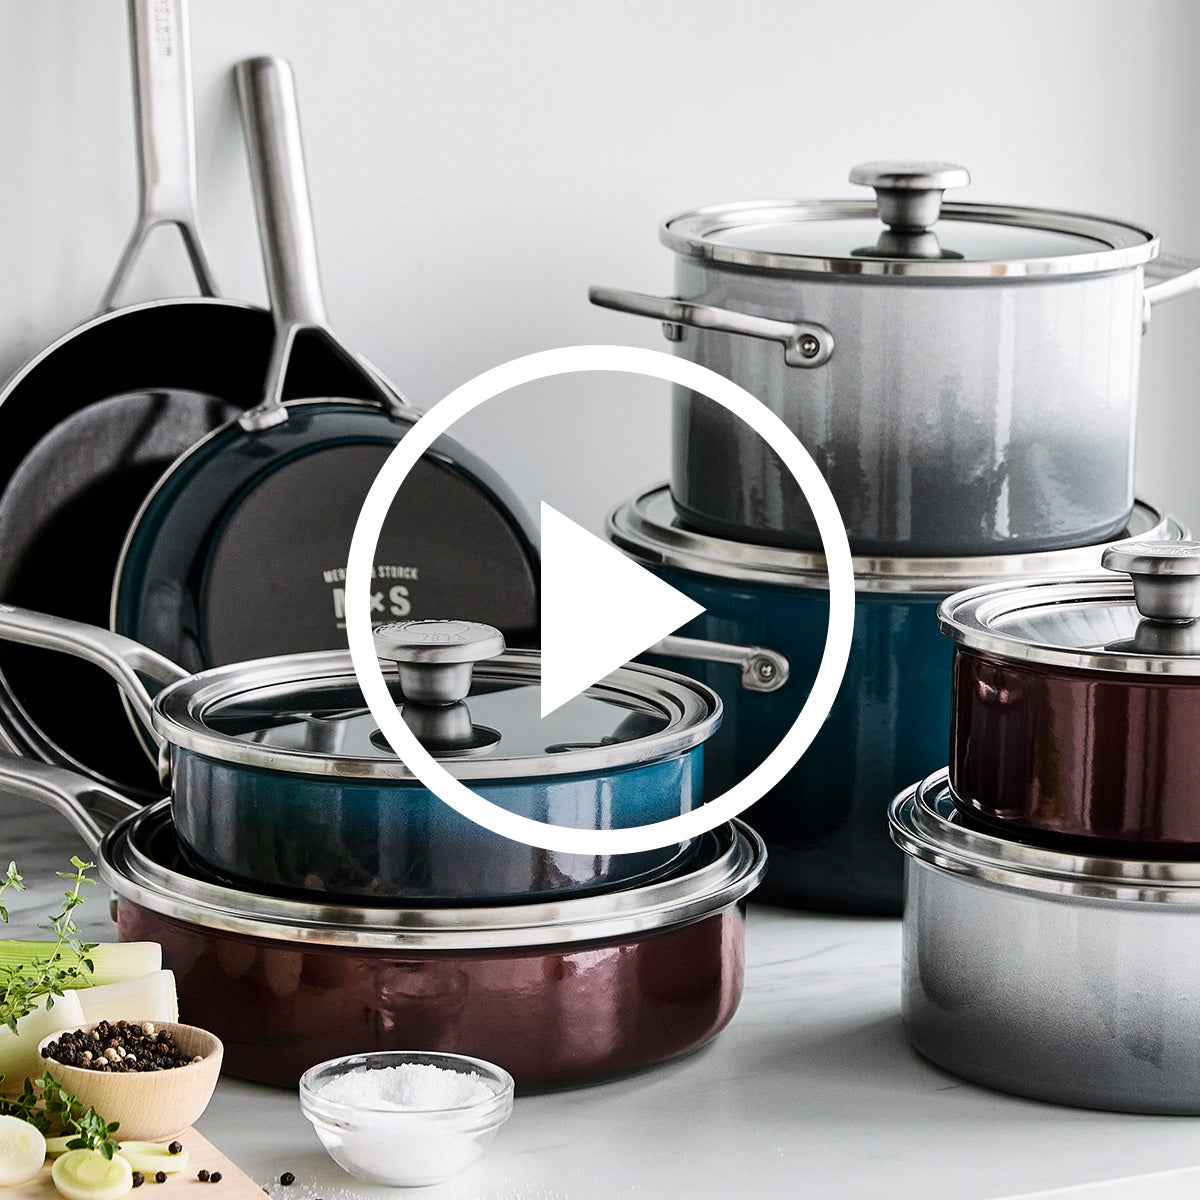 Merten and Storck  Stainless Steel 8-Piece Cookware Set